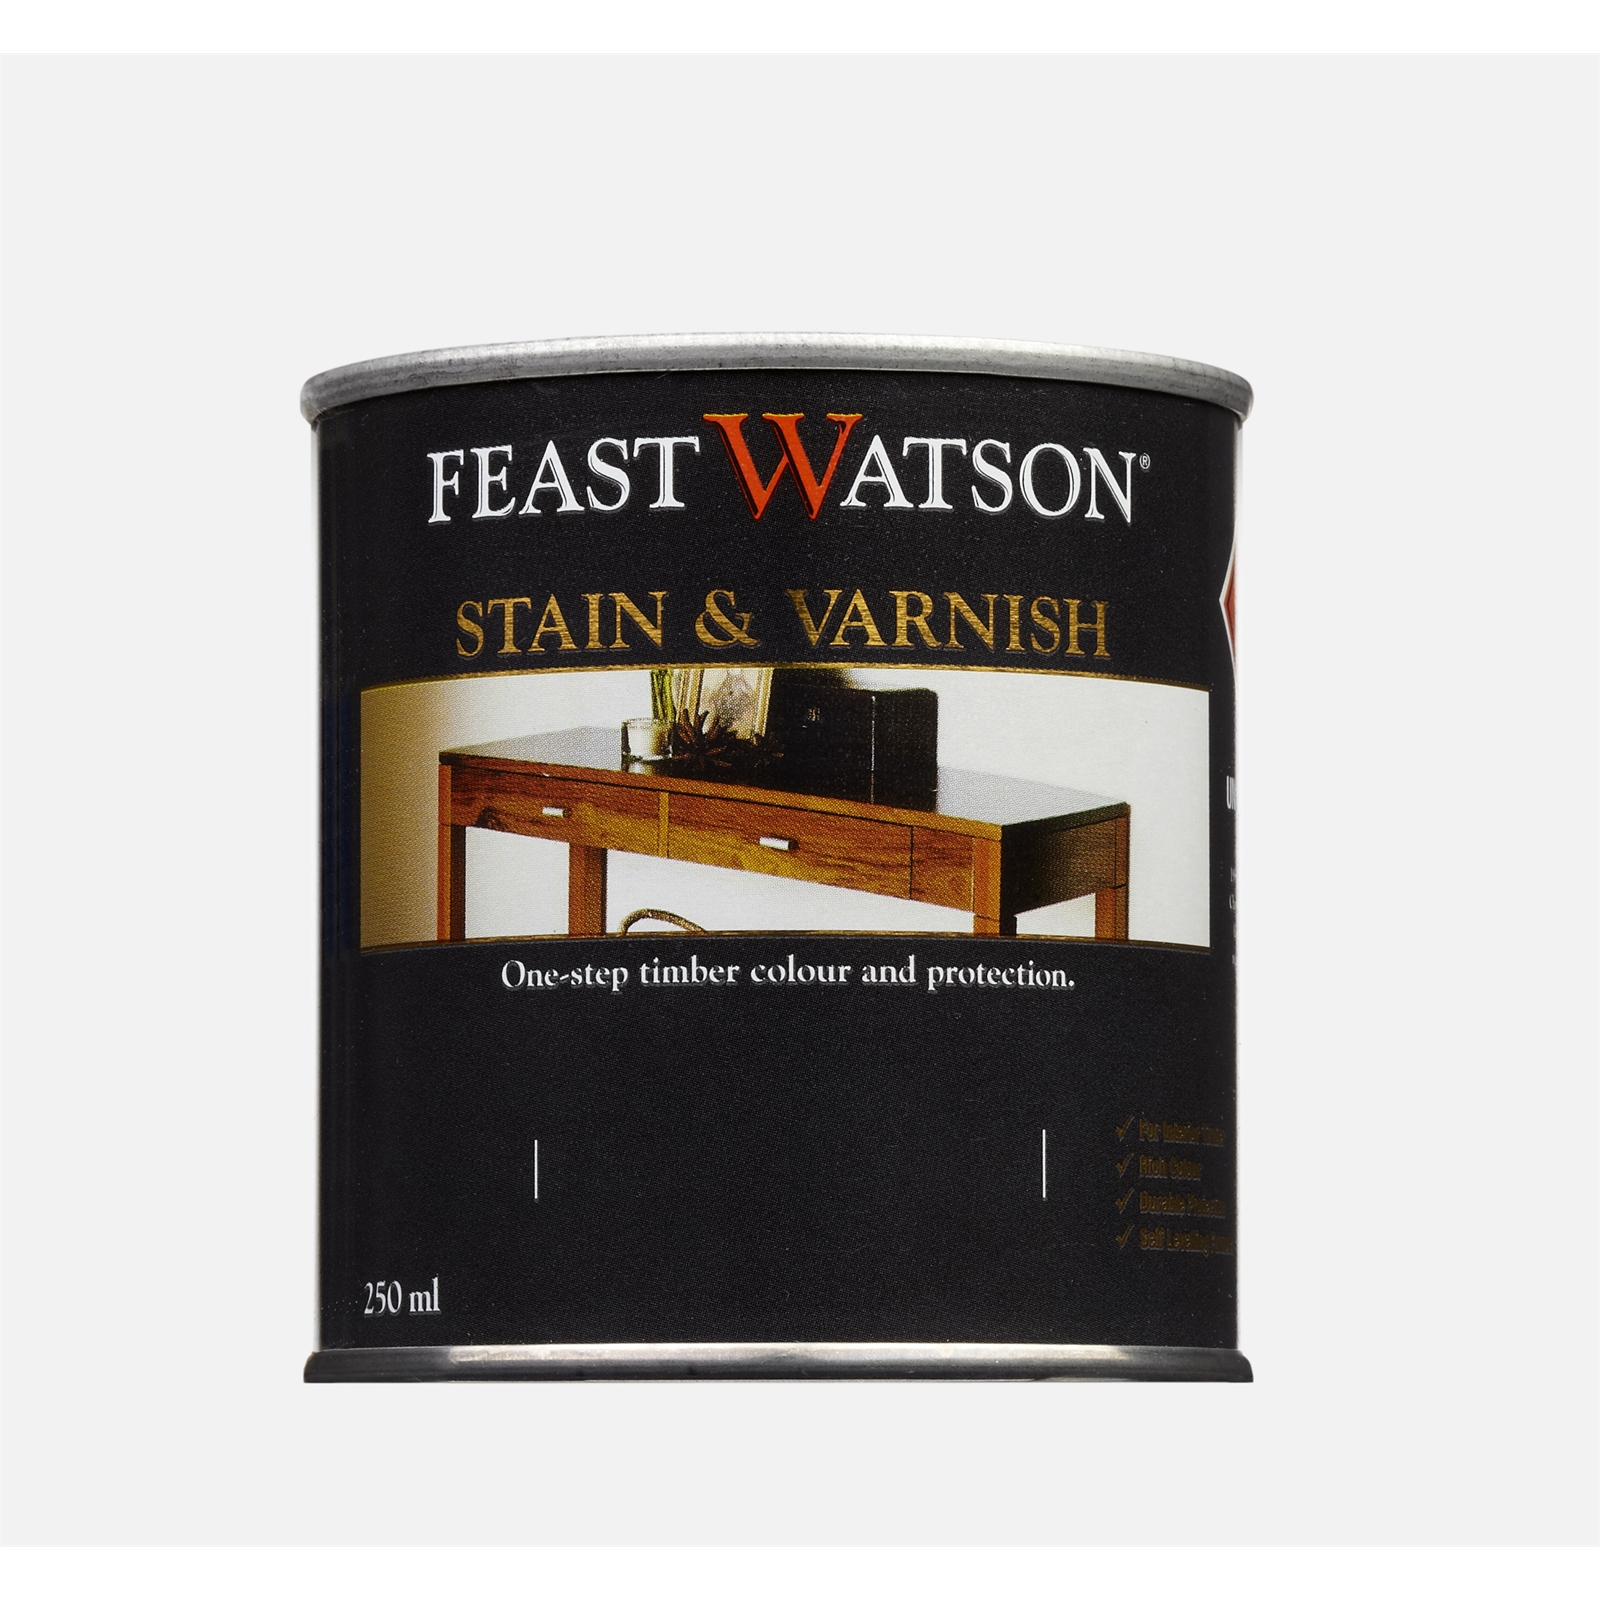 Feast Watson 250ml Gloss Aged Teak Stain And Varnish